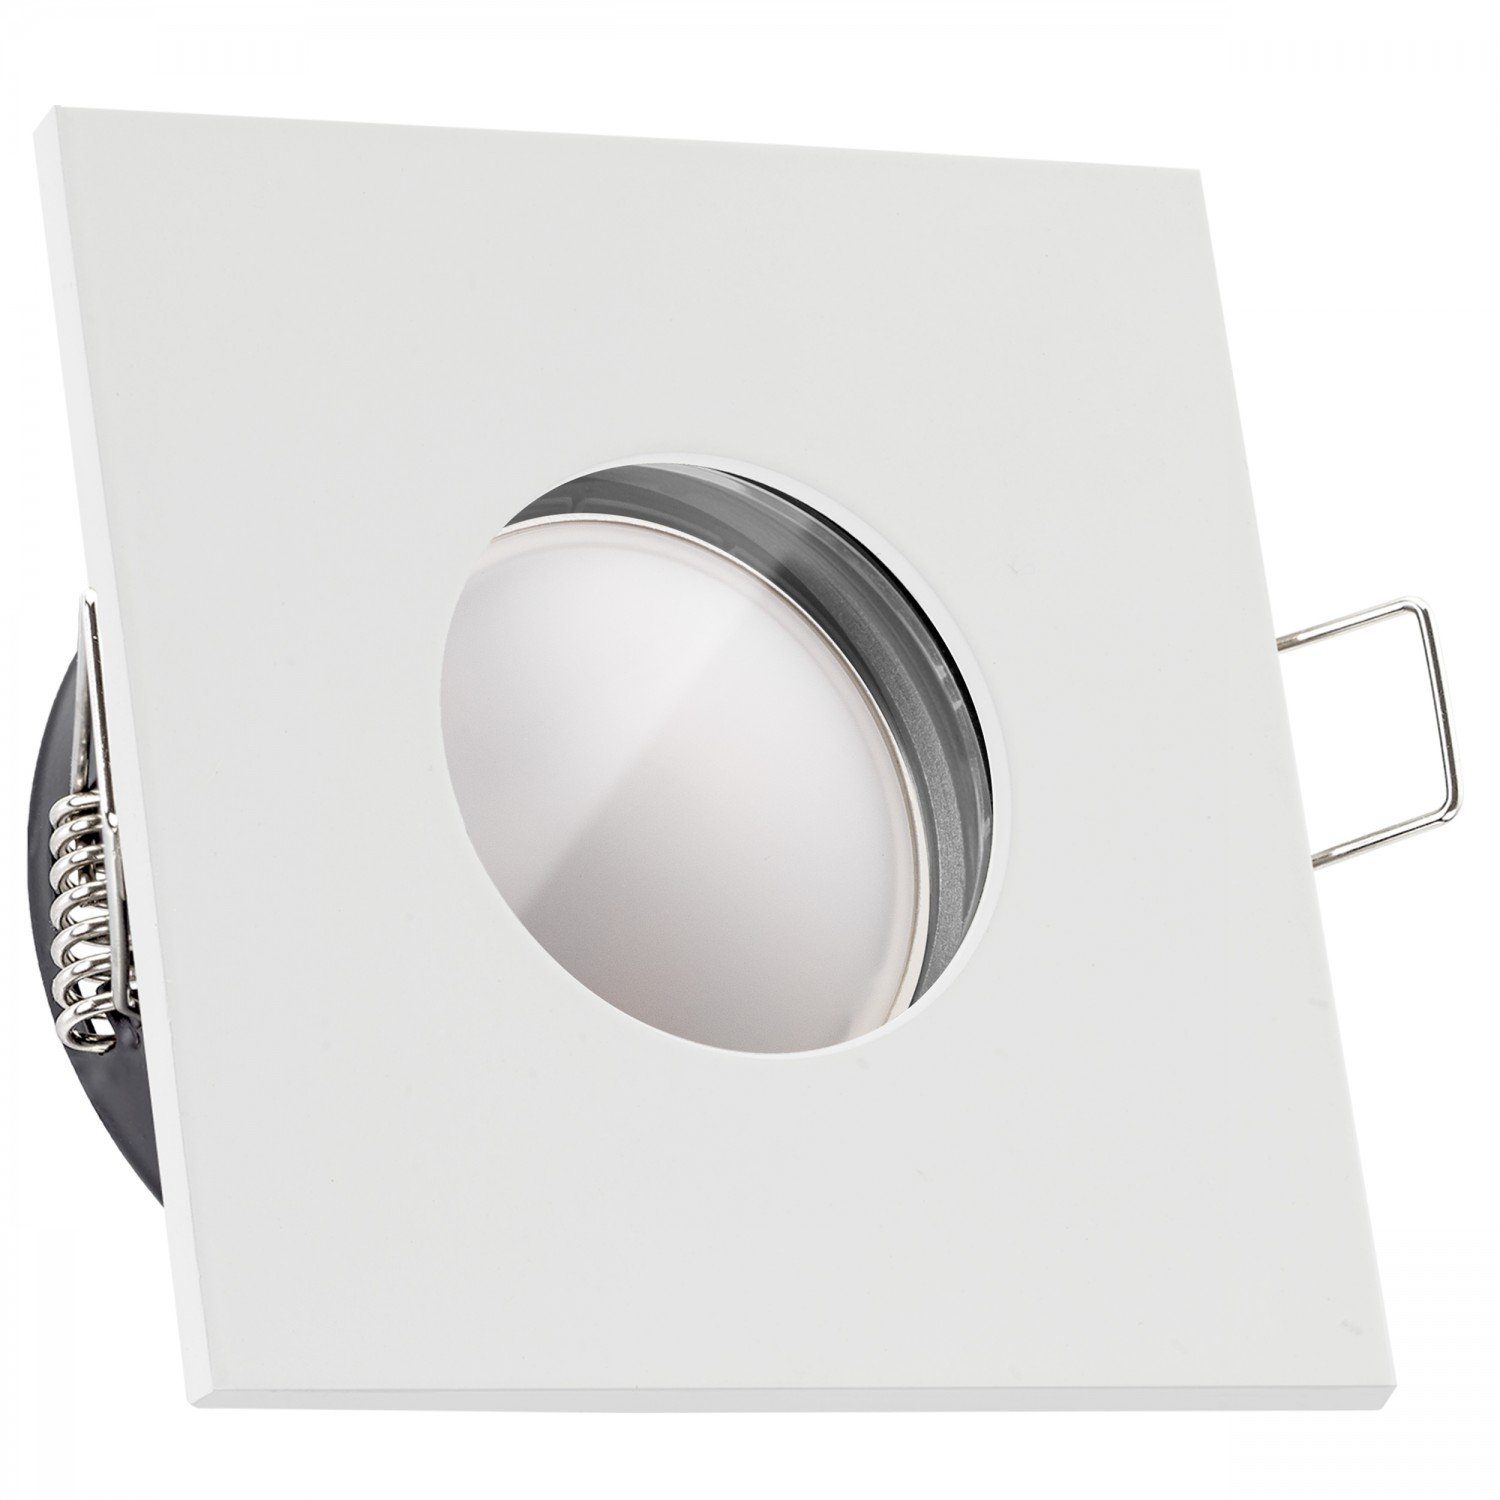 LEDANDO LED Einbaustrahler IP65 LED Einbaustrahler Set extra flach in weiß mit 5W Leuchtmittel vo